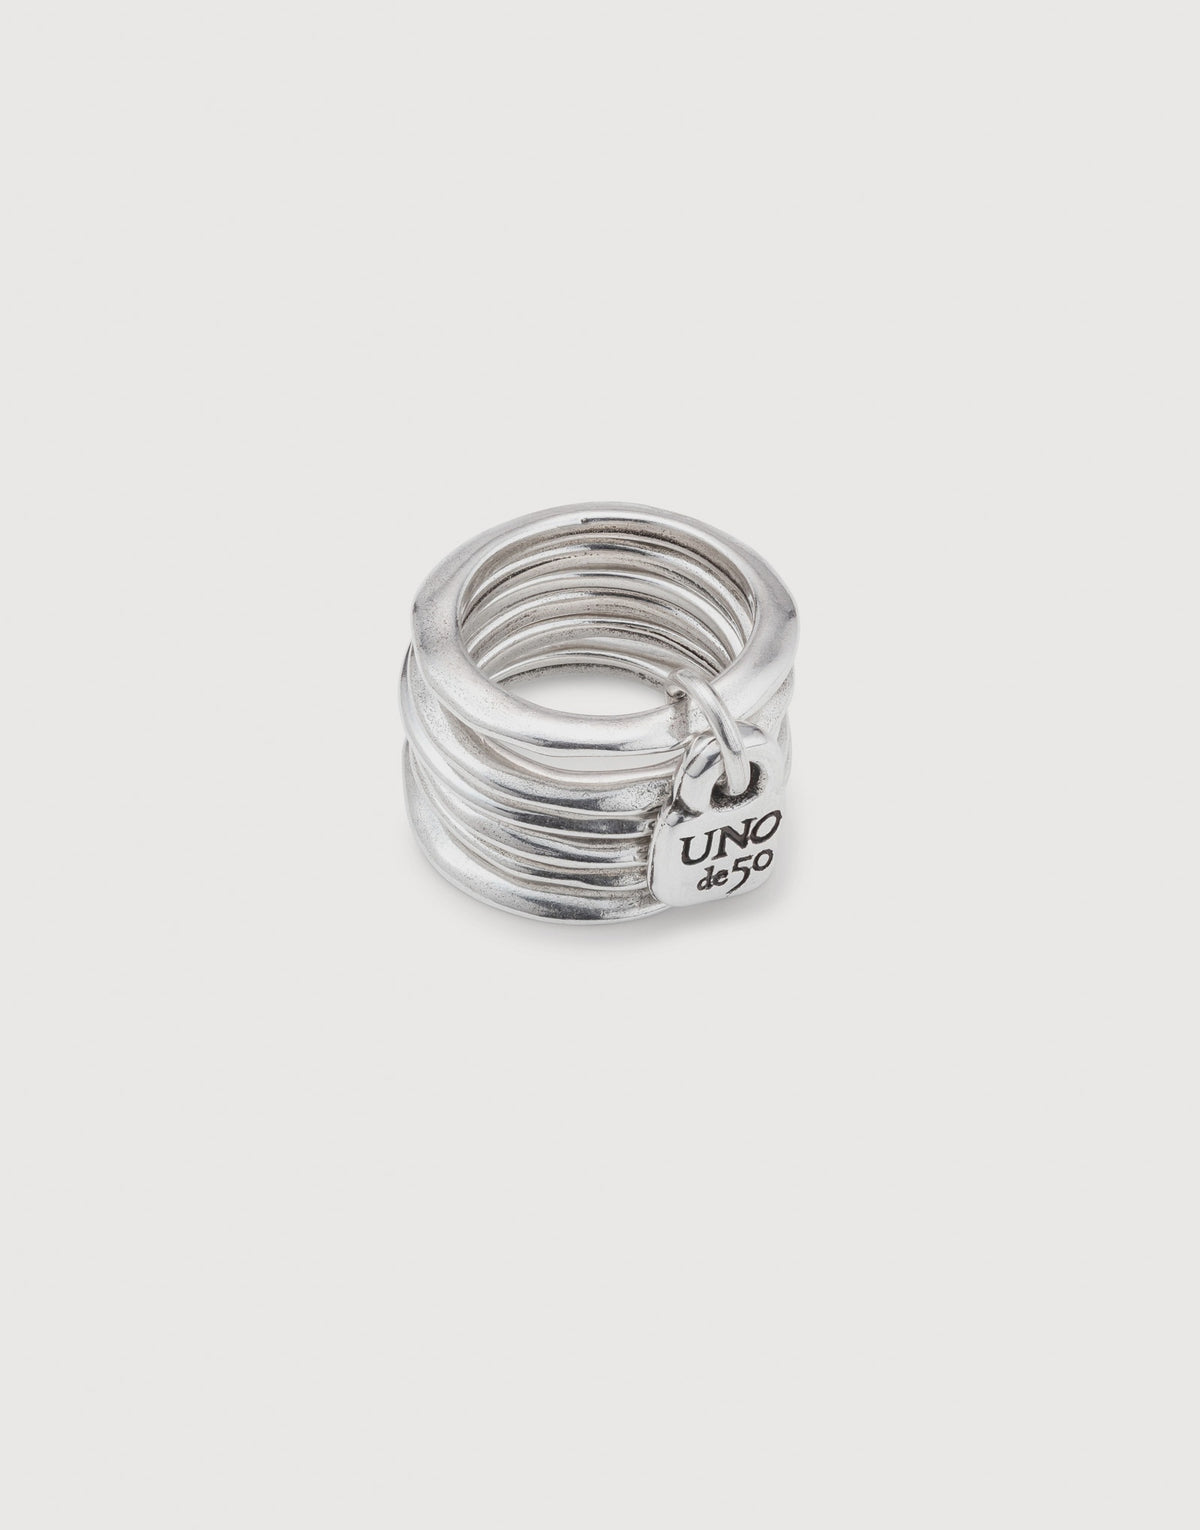 Prisoner Silver Ring